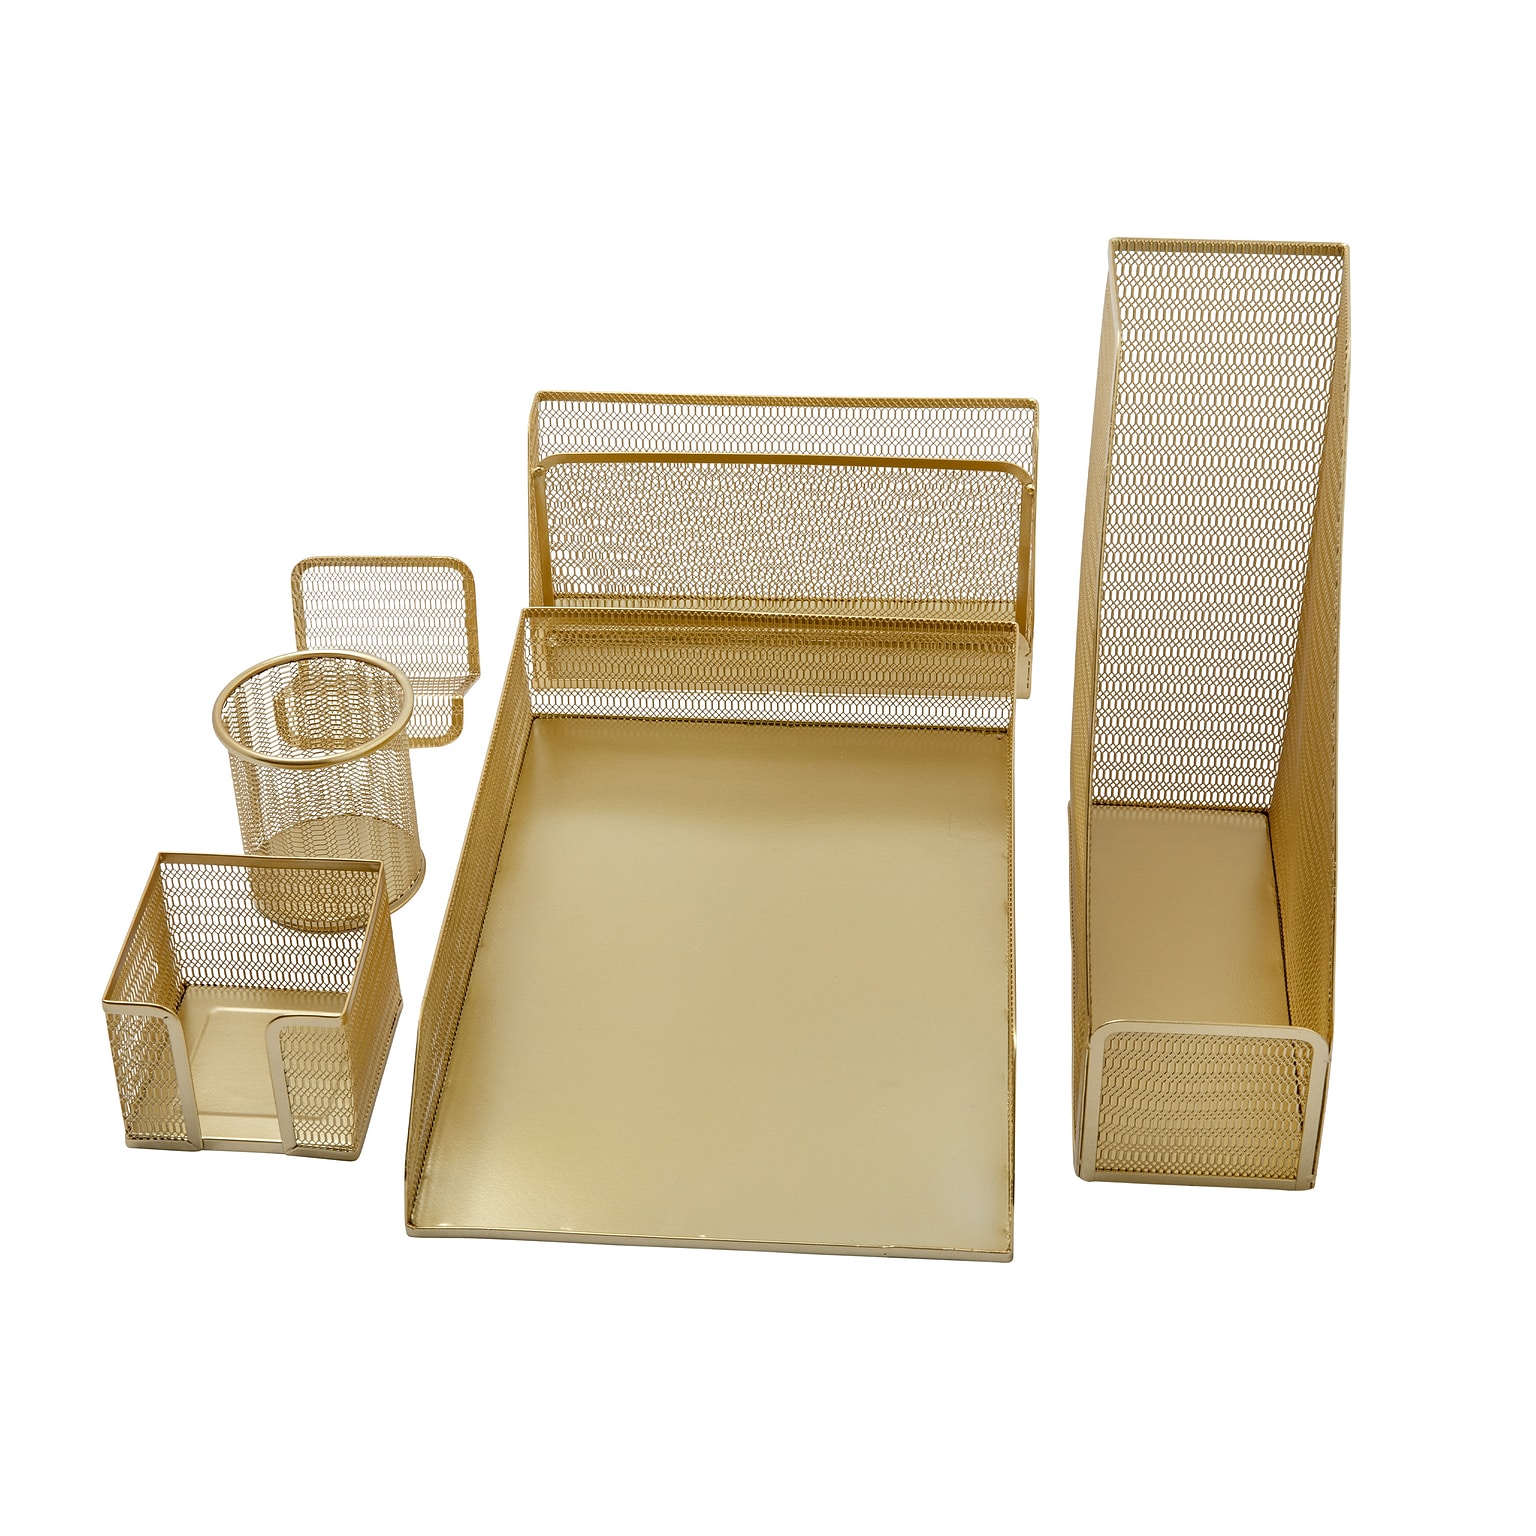 Martha Stewart Ryder 6-Piece Mesh Metal Desktop Organizer Set, Gold (HHOHD146GLD)